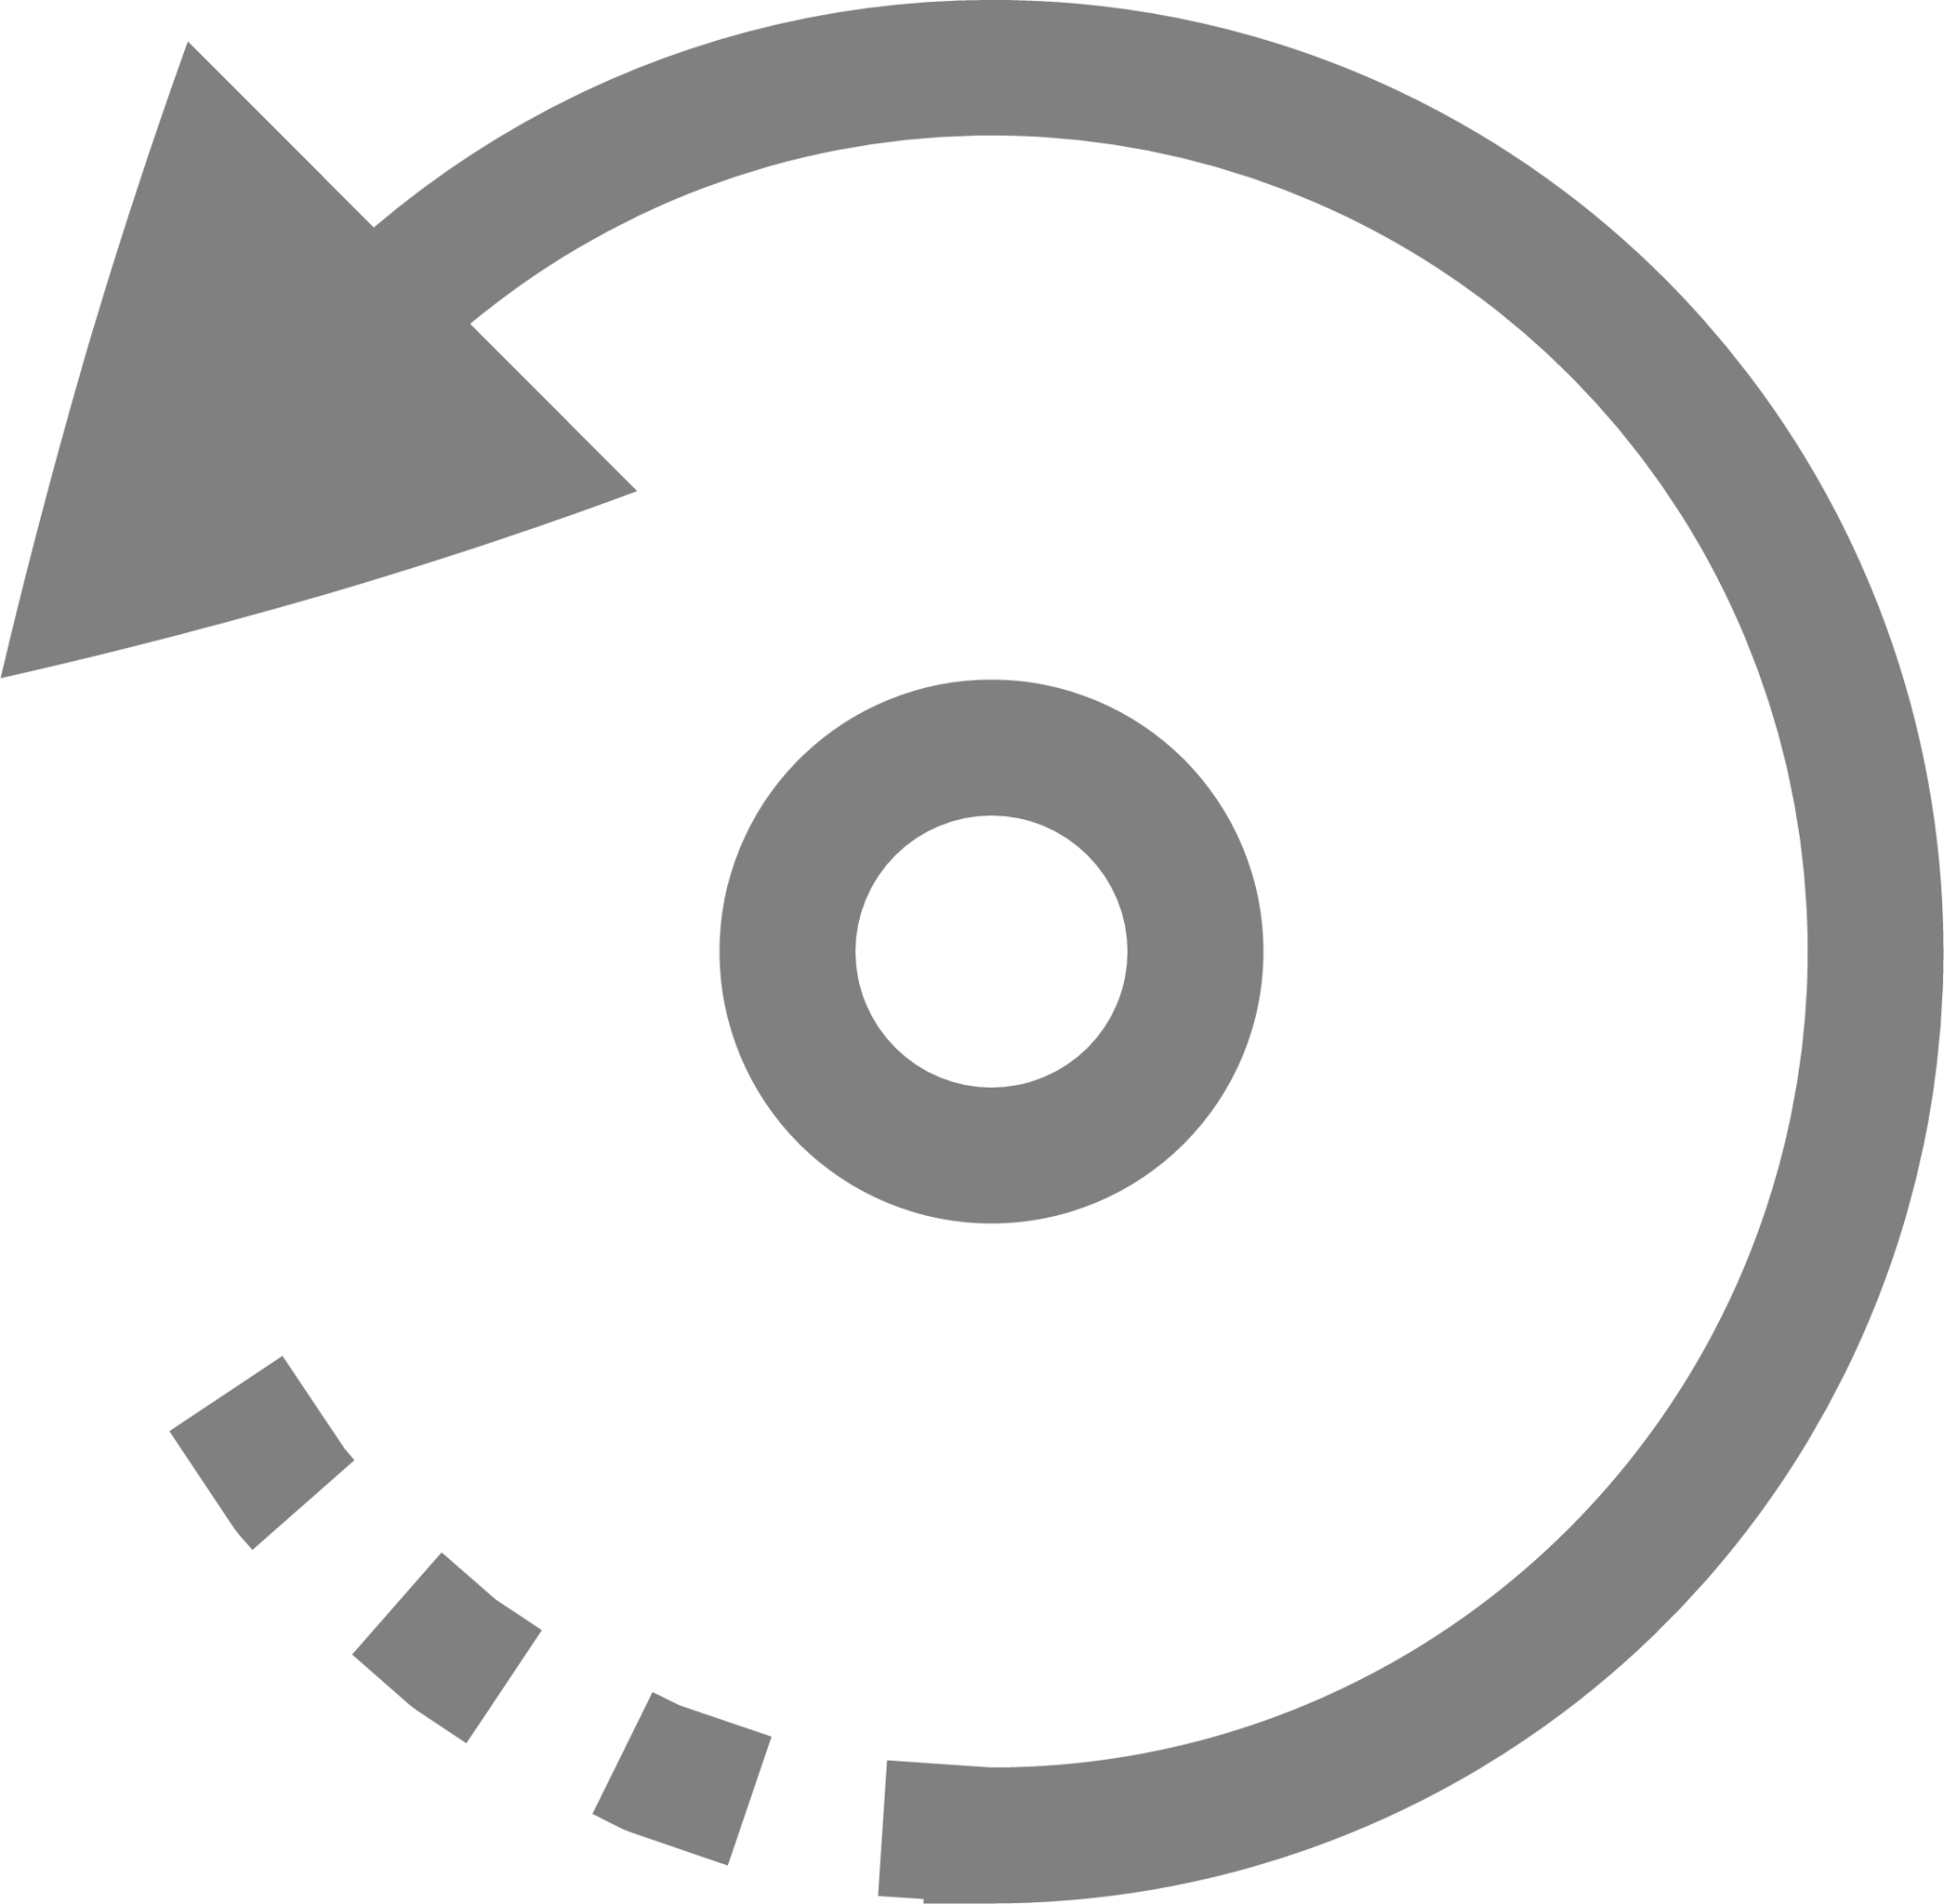 object rotate left symbolic icon